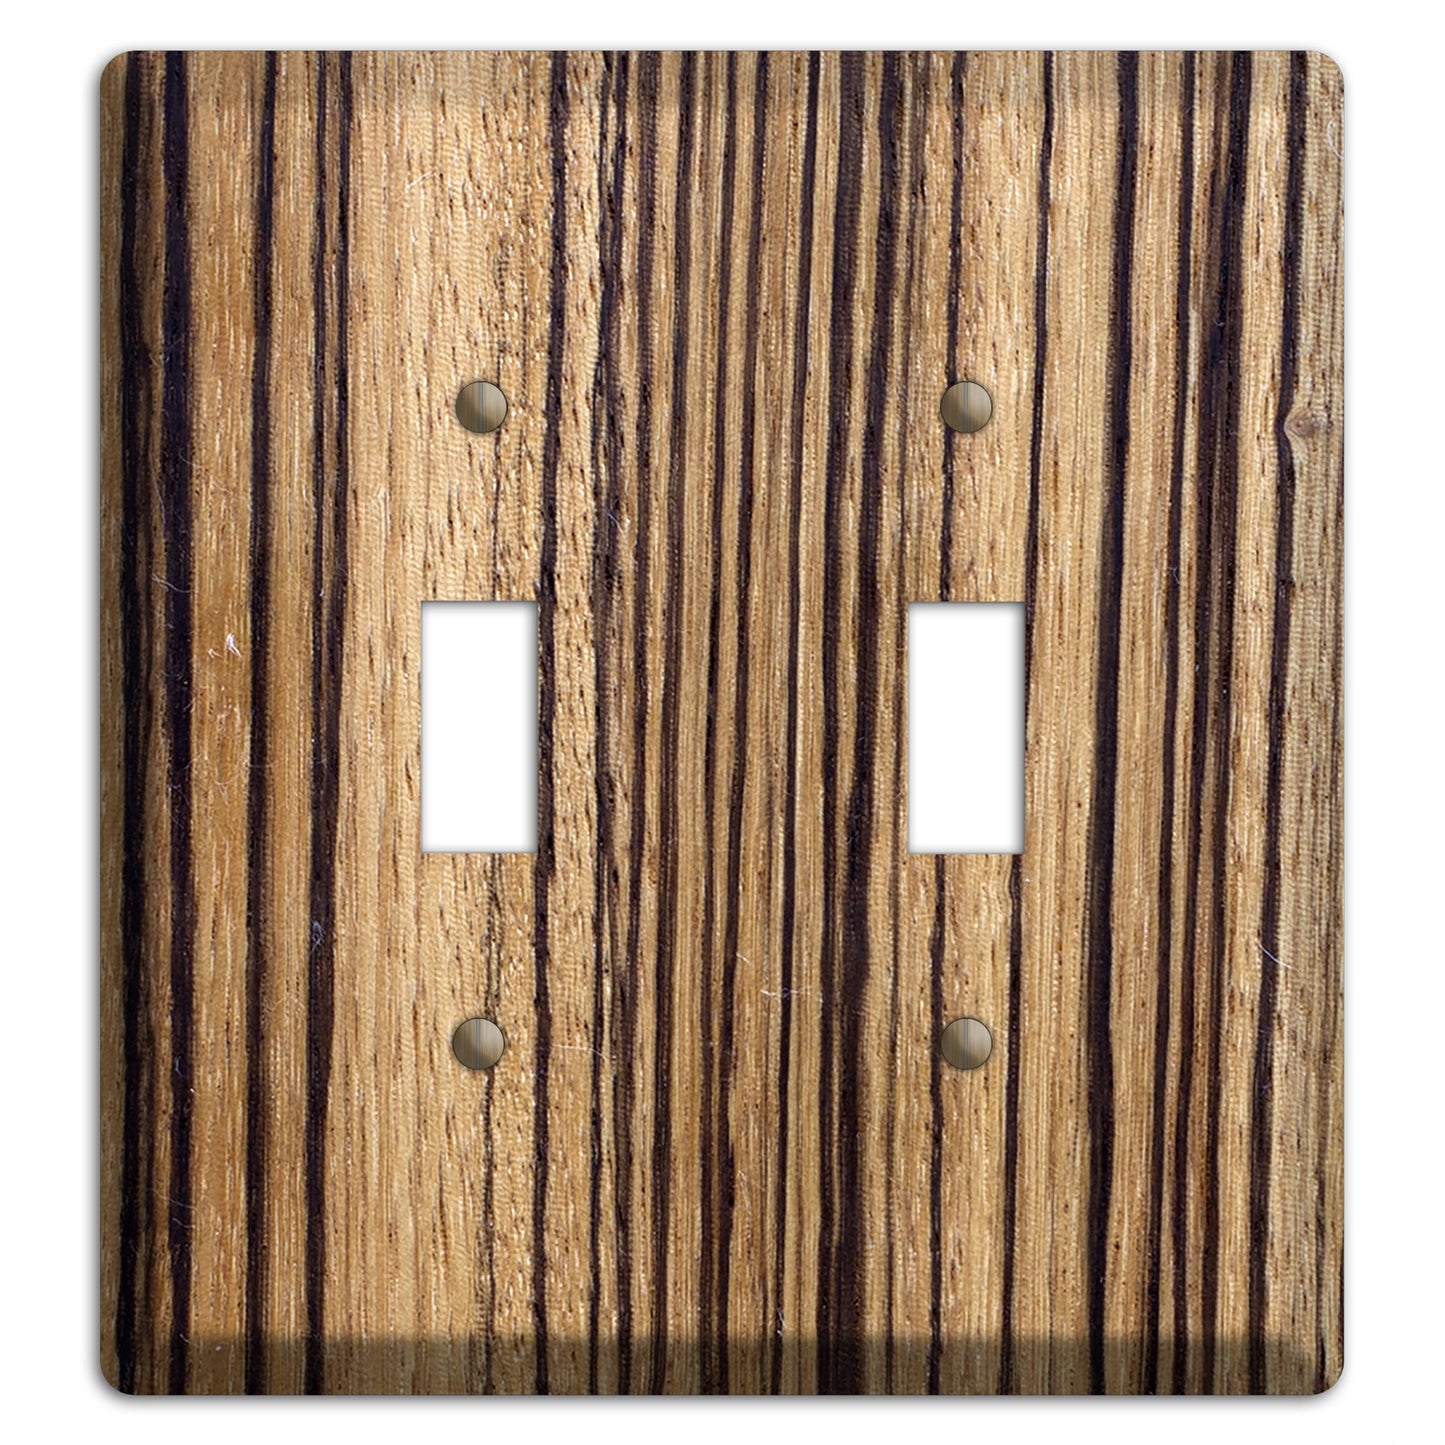 Zebrawood Wood Double Toggle Switchplate